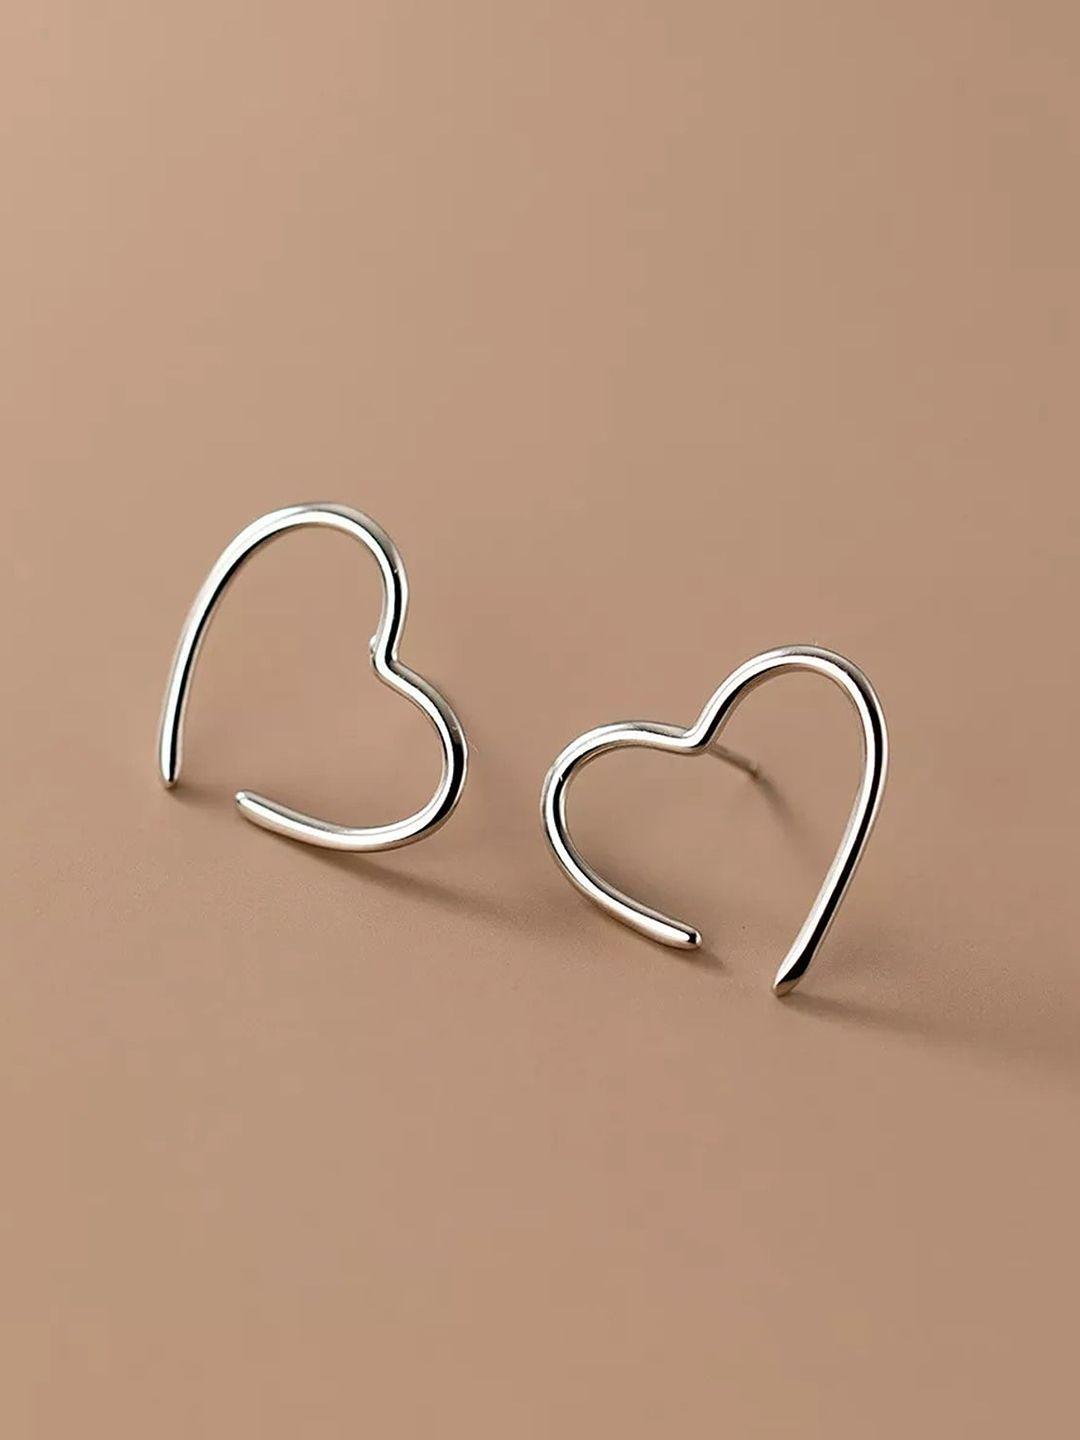 pinapes set of 2 heart shaped ear cuff earrings